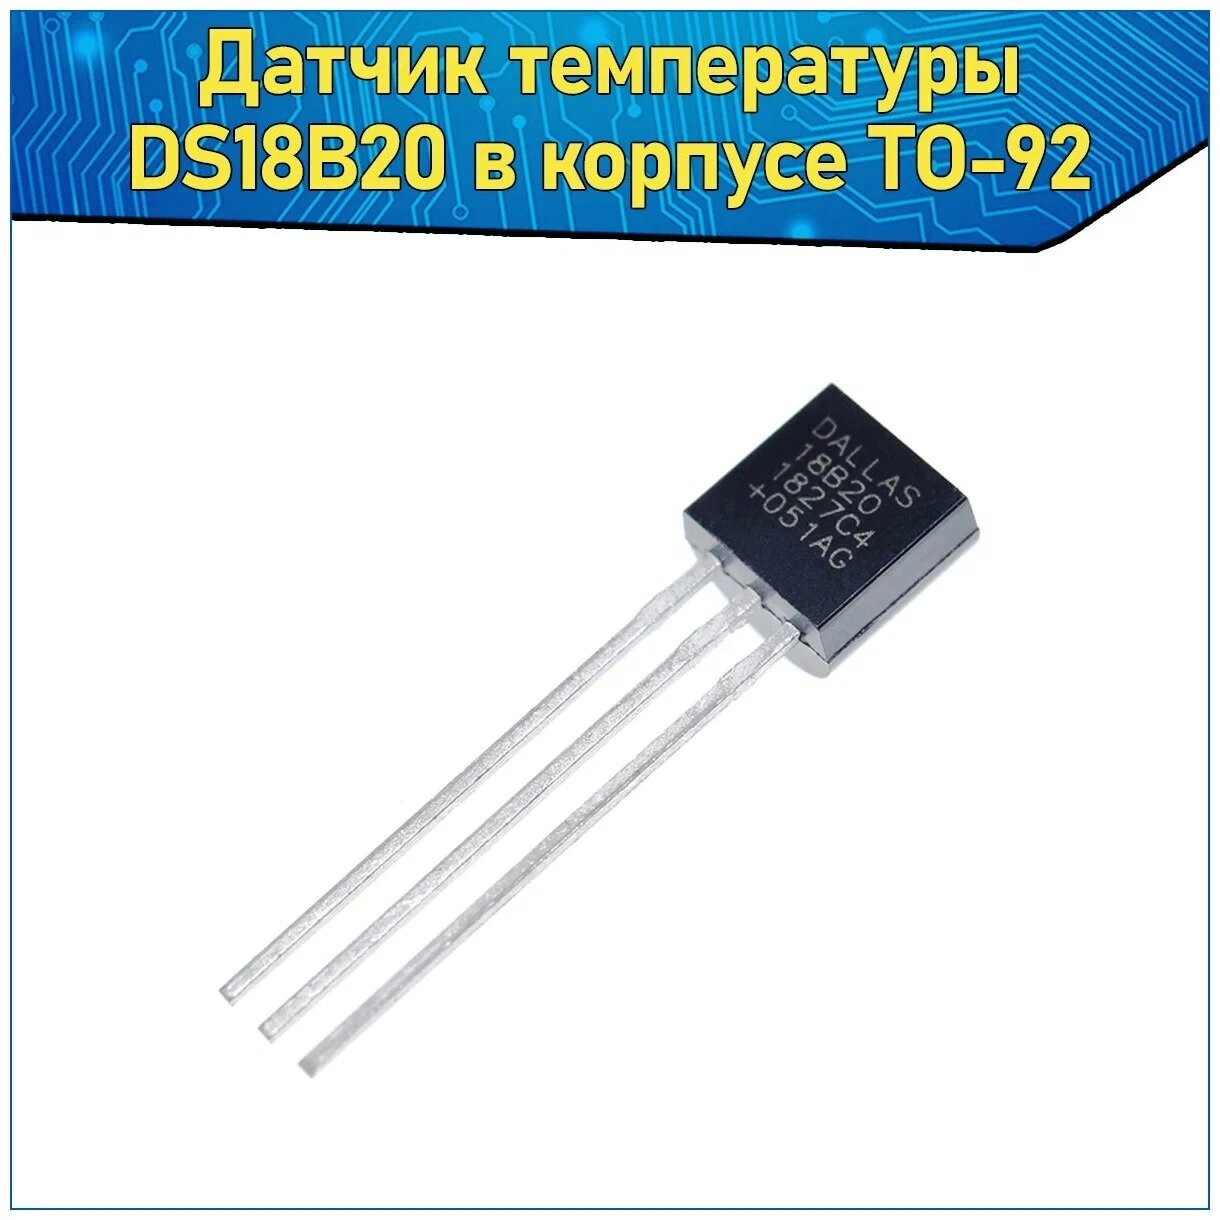 Модуль датчик температуры (цифровой термометр) DS18B20 в корпусе TO-92 Arduino &Комплектующие для платформы Ардуино 2 шт.